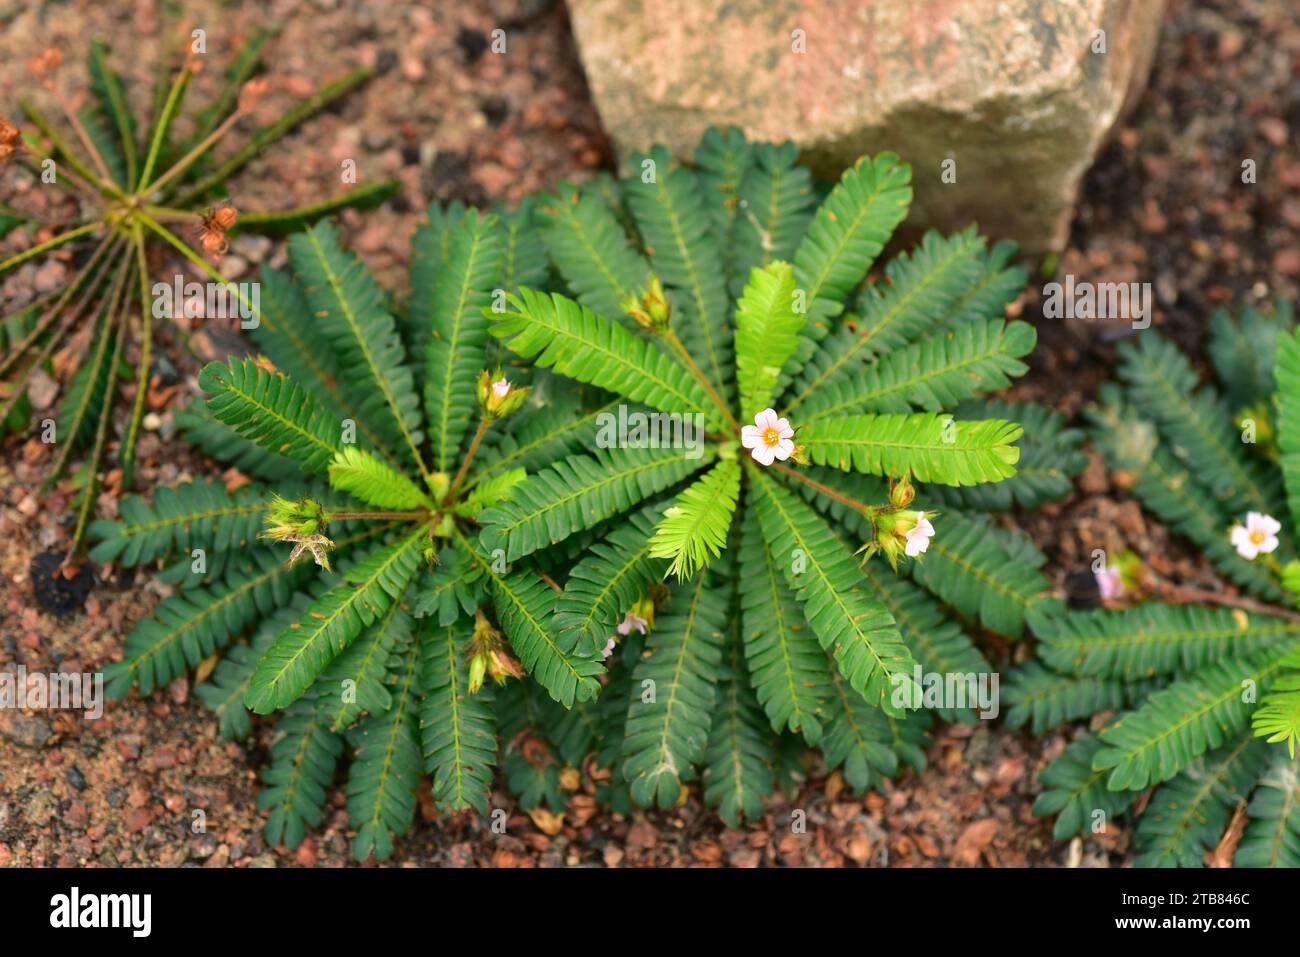 Little tree plant (Biophytum sensitivum) is a medicinal plant native to sotheast Asia. Stock Photo